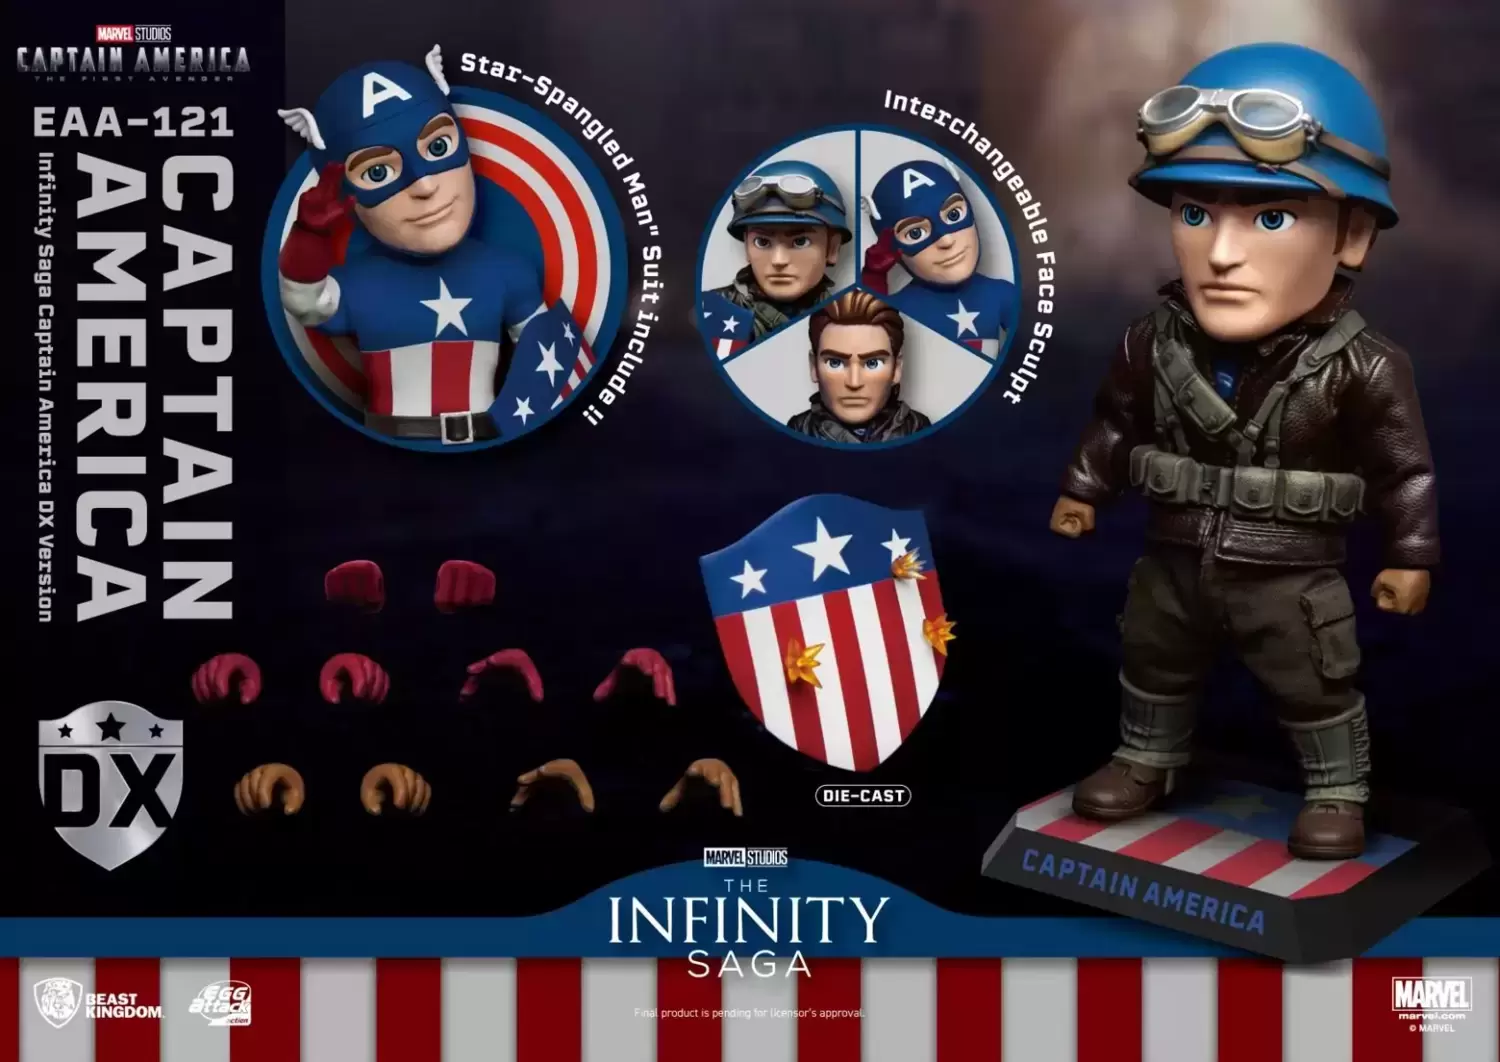 Egg Attack Action - Infinity Saga Captain America DX Version